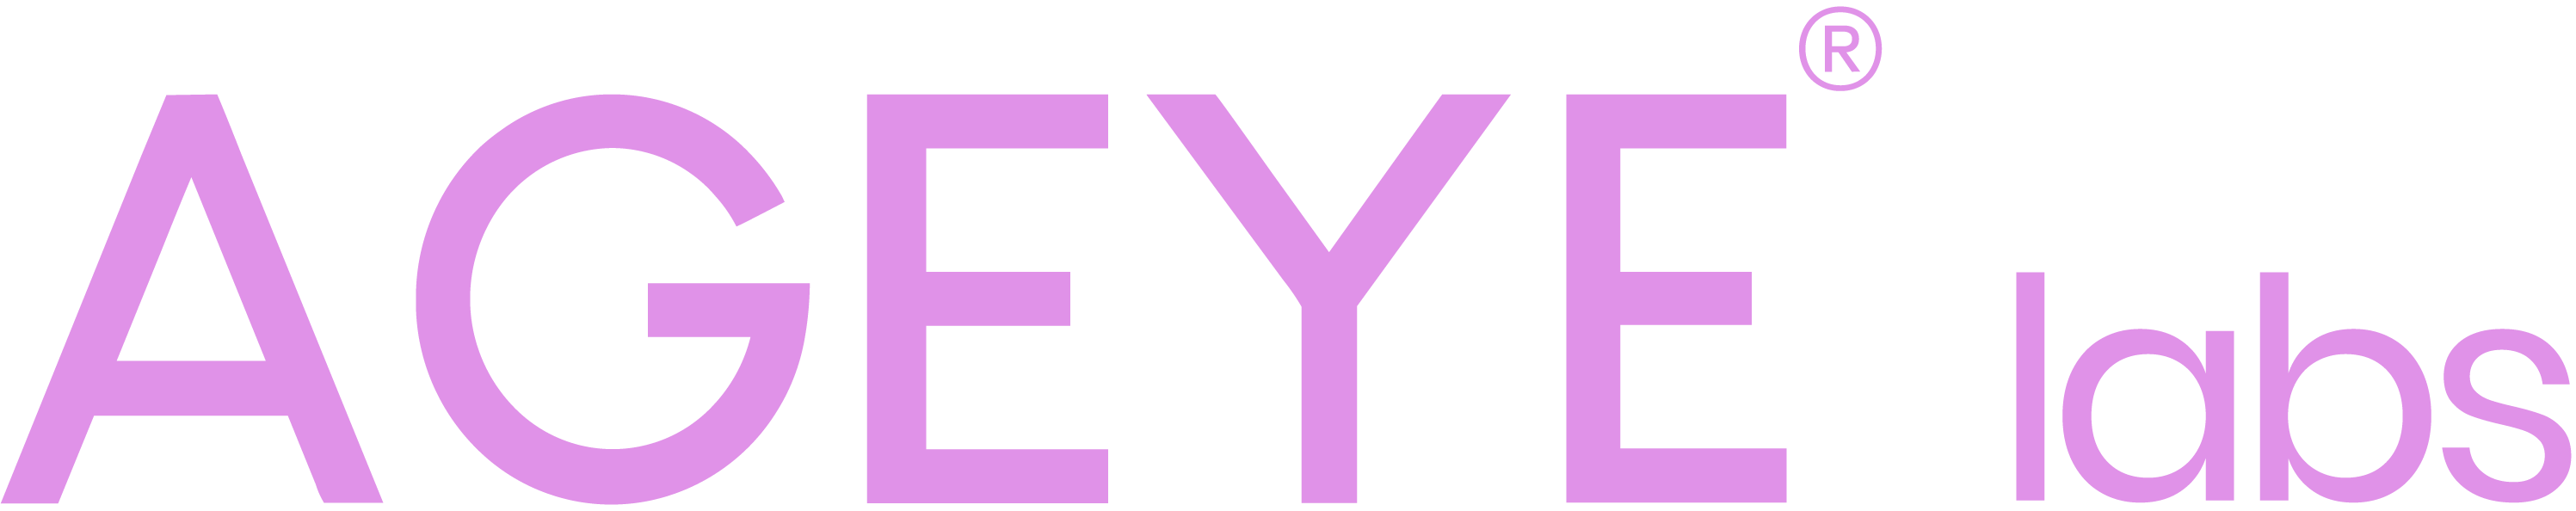 AGEYE-labs_logo